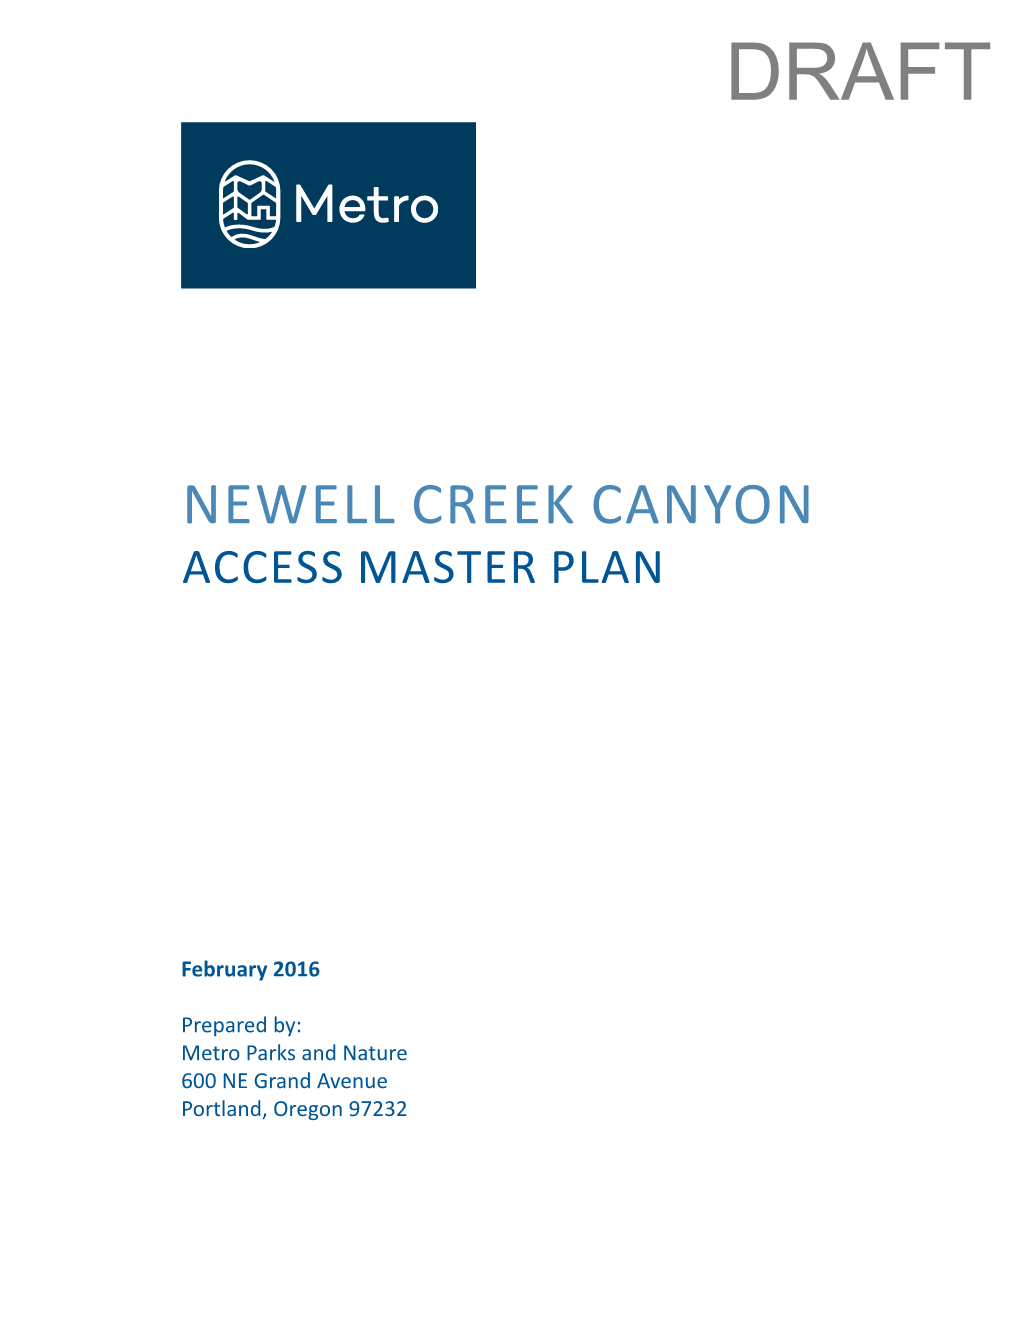 Newell Creek Canyon Access Master Plan